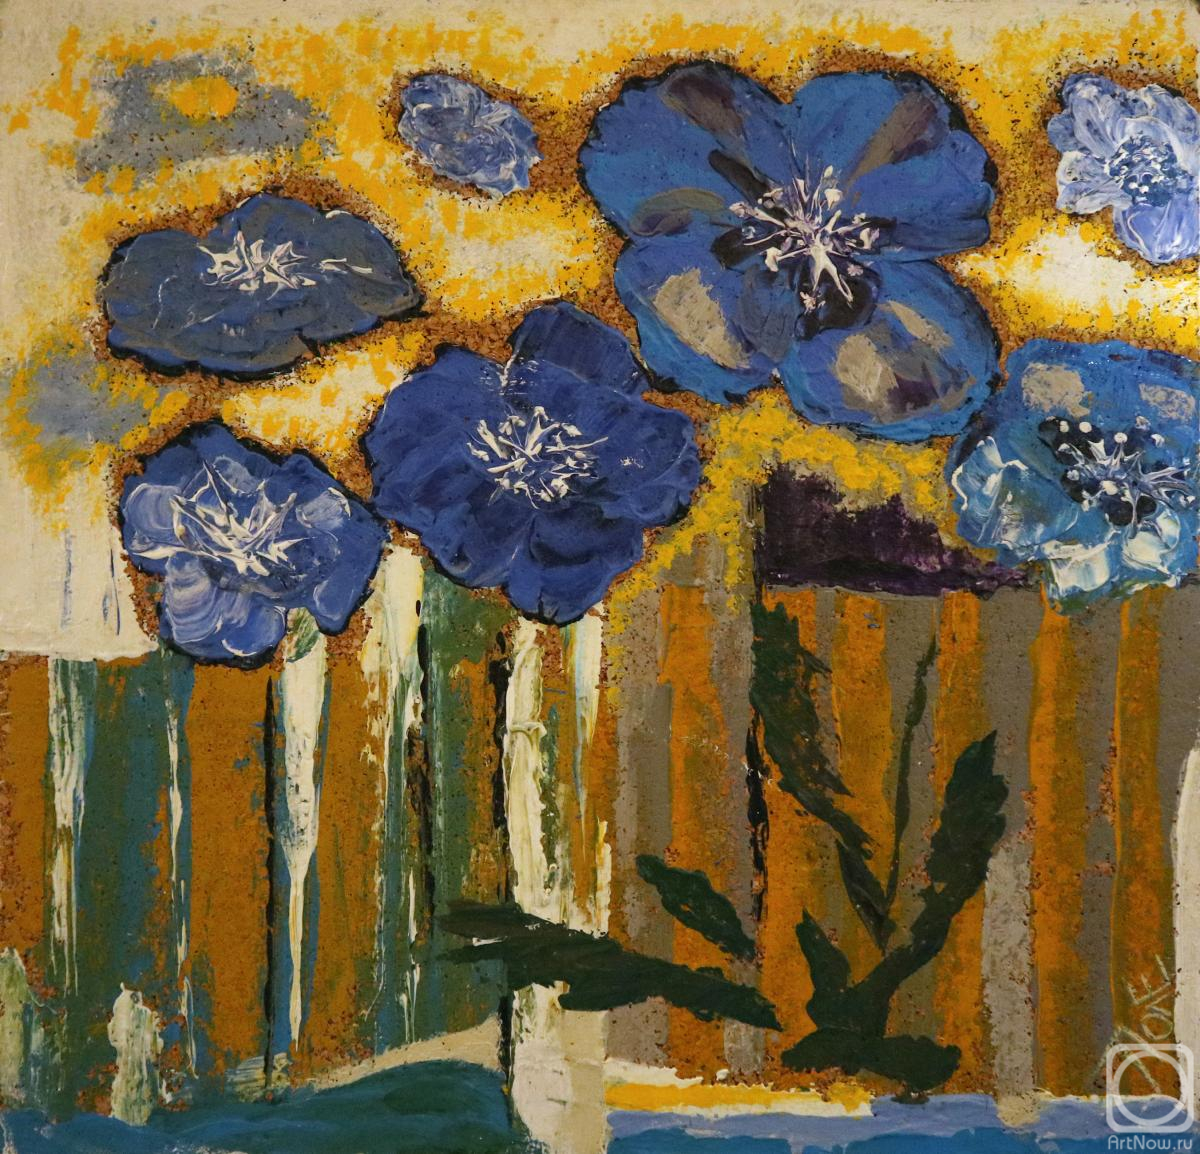 Polischuk Olga. An abstraction. Blue poppies